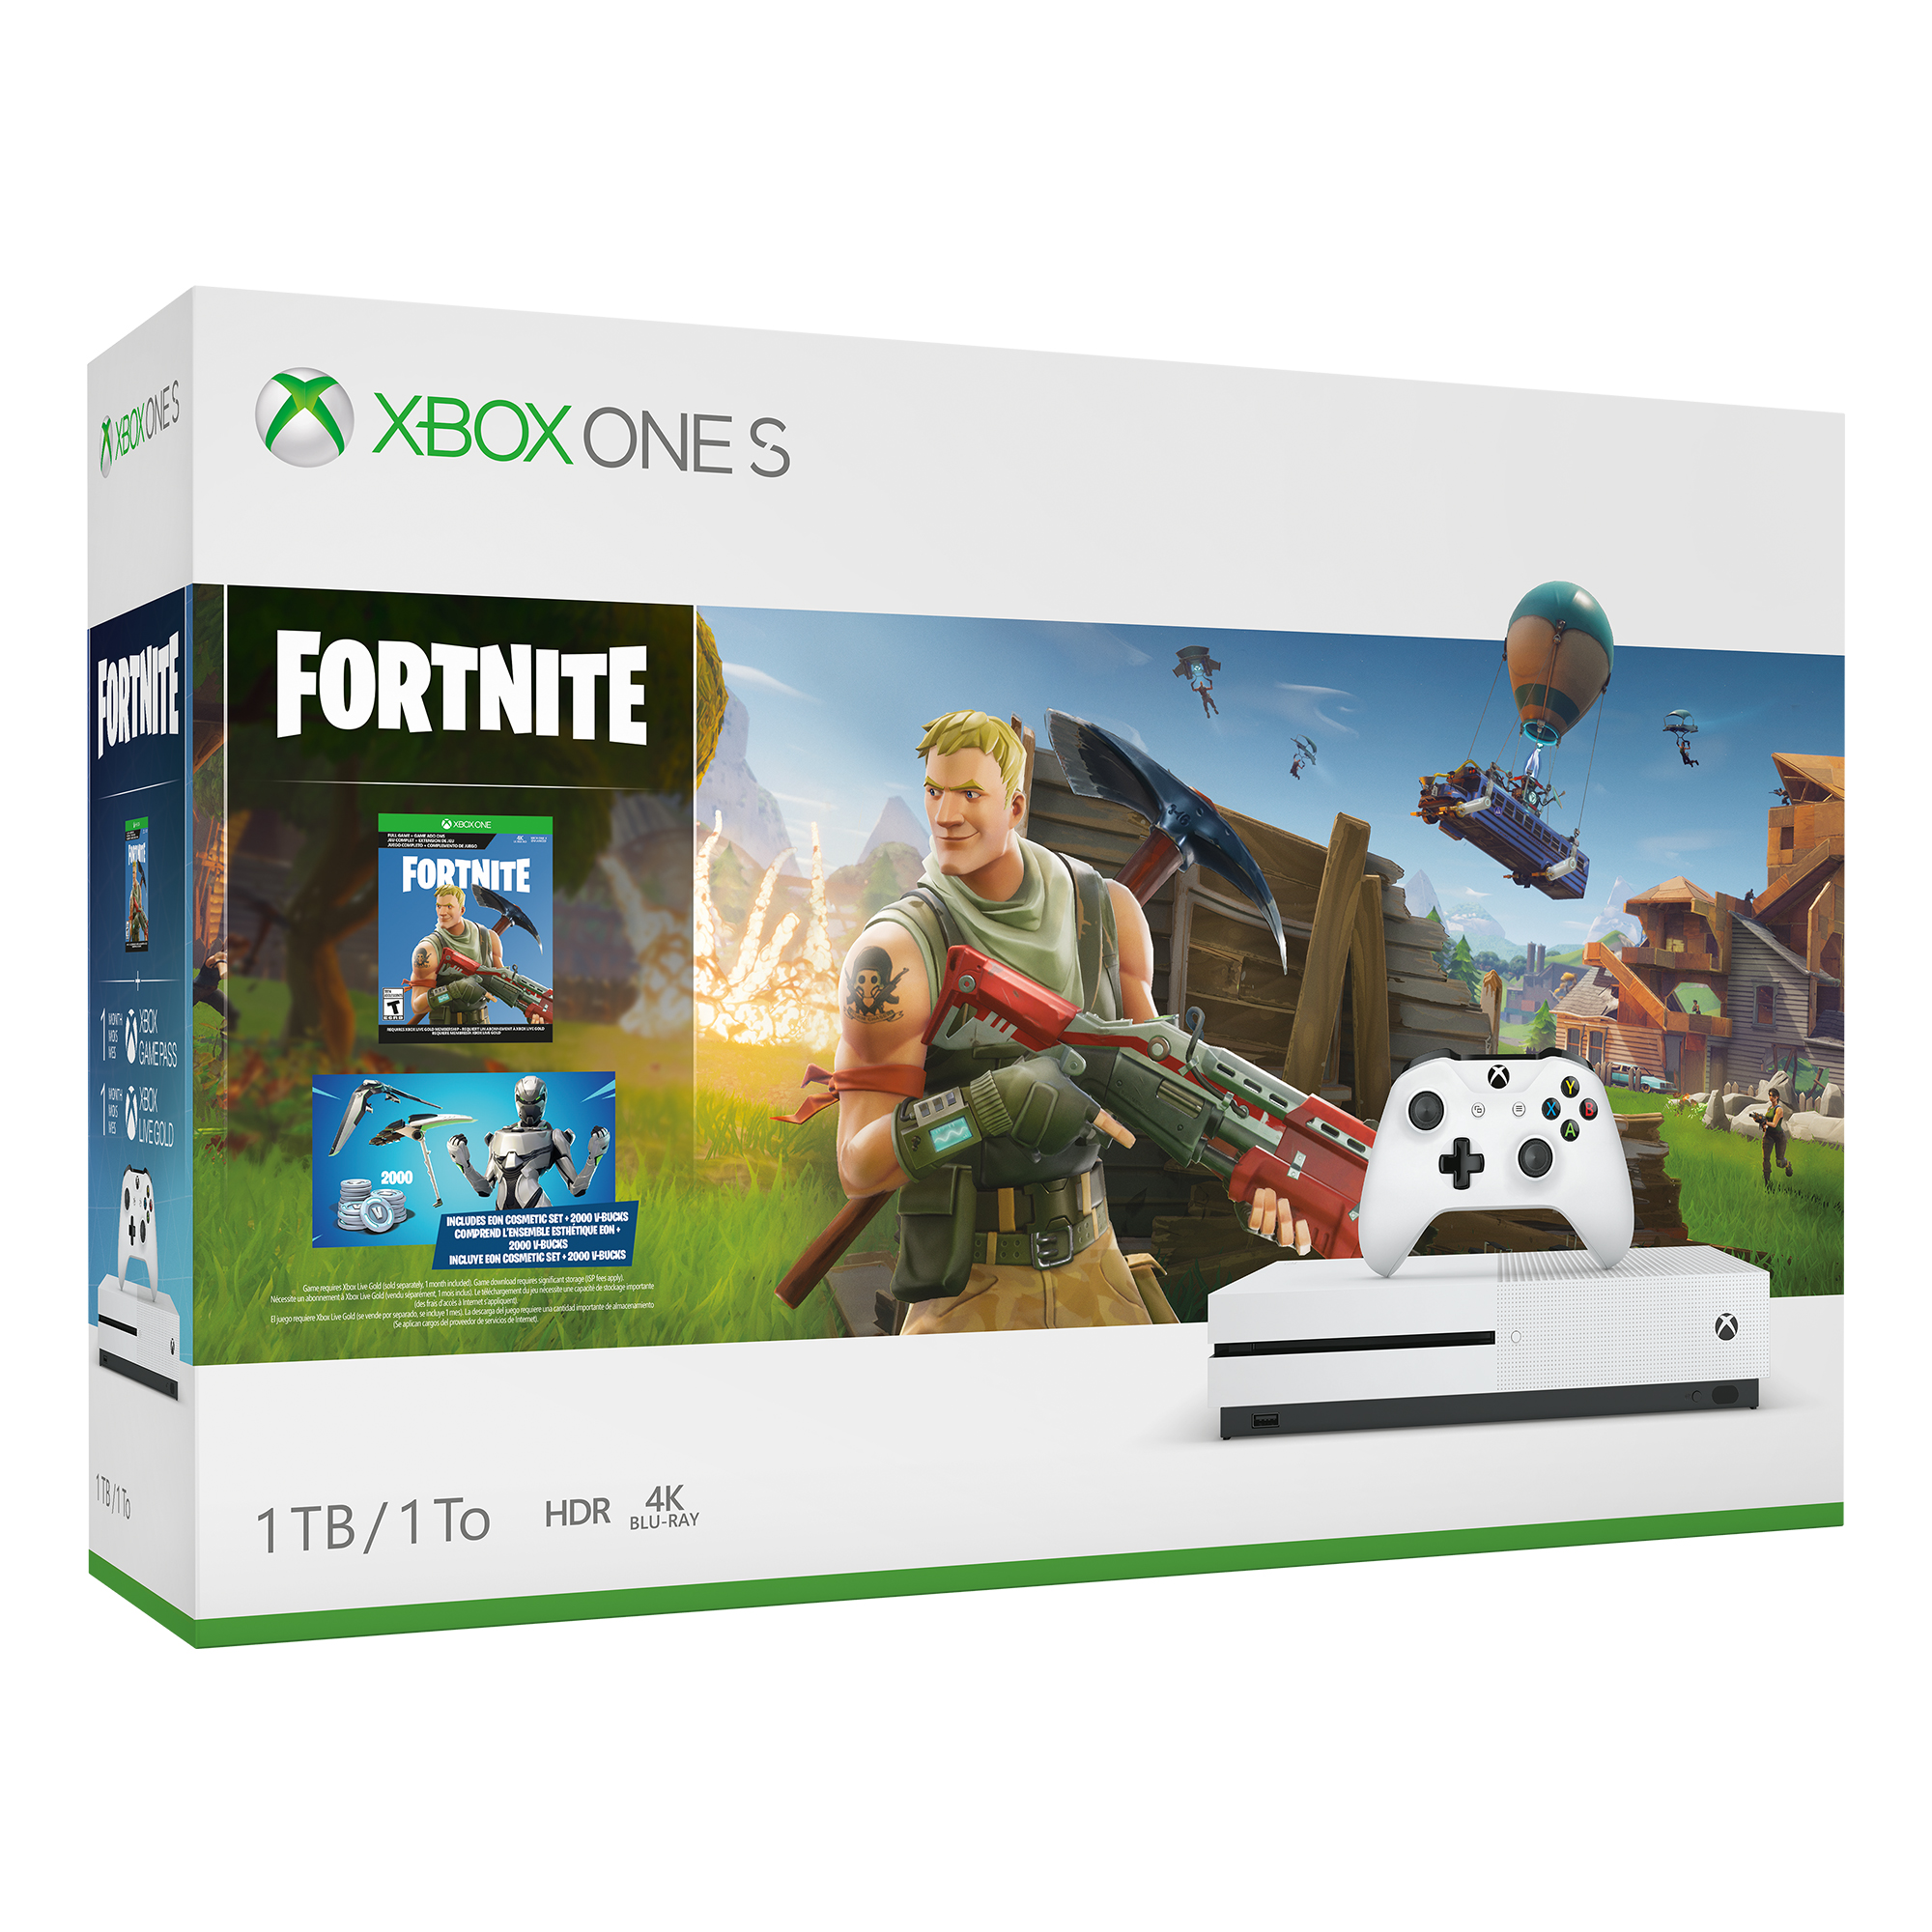 Microsoft Xbox One S 1TB Fortnite Bundle, White, 234-00703 - image 1 of 16